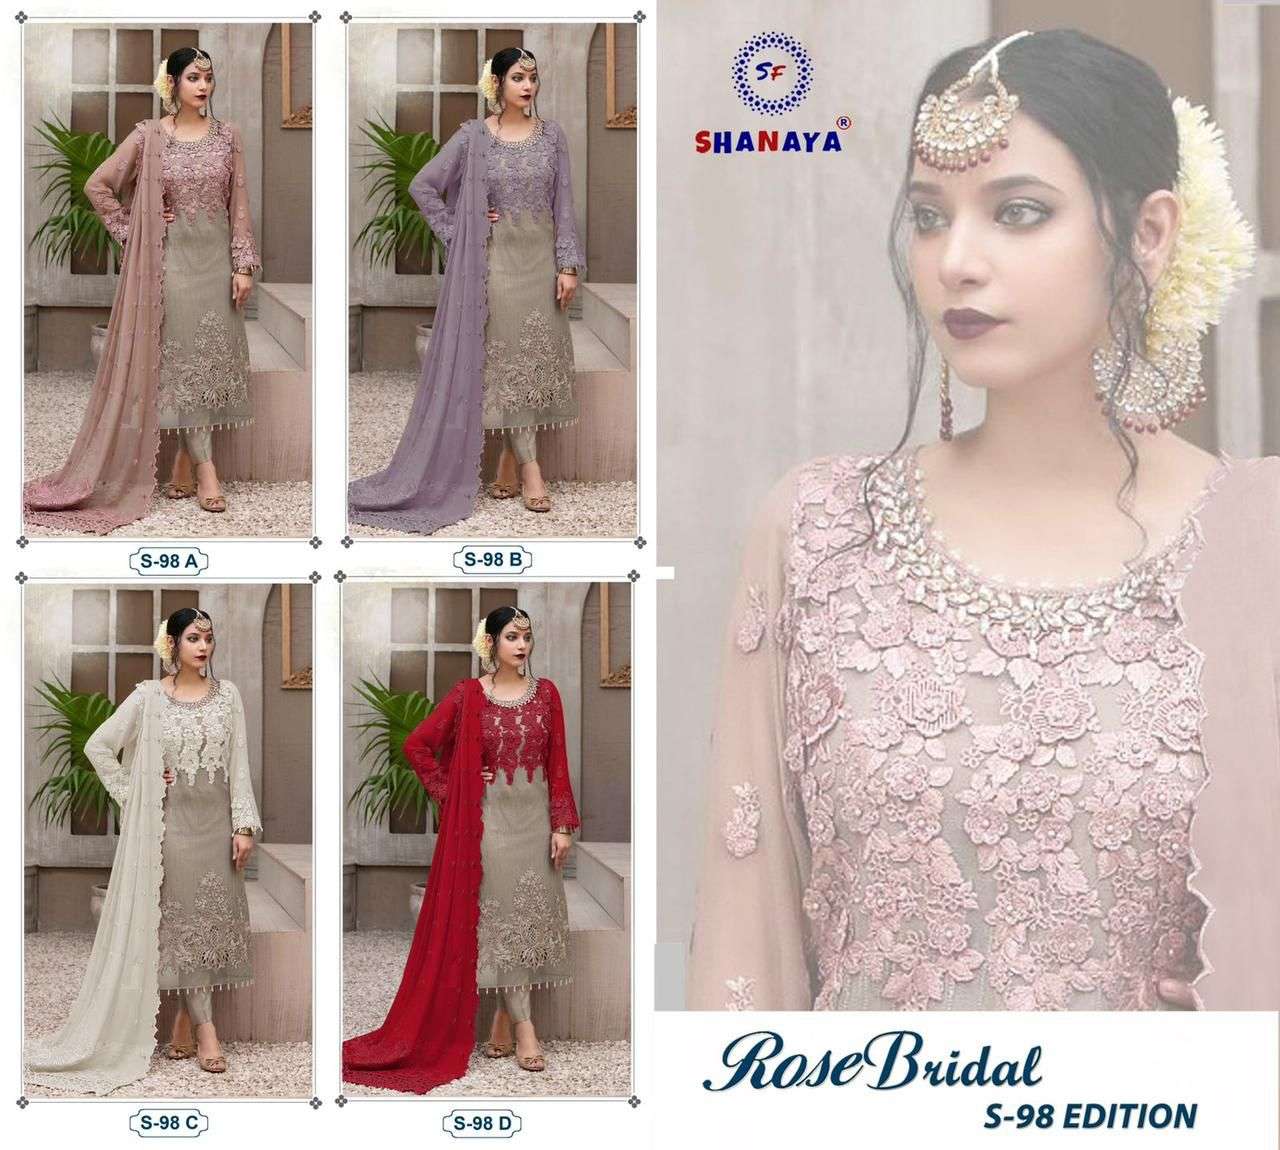 Shanaya Fashion Rose Bridal Edition S-98 Colors 